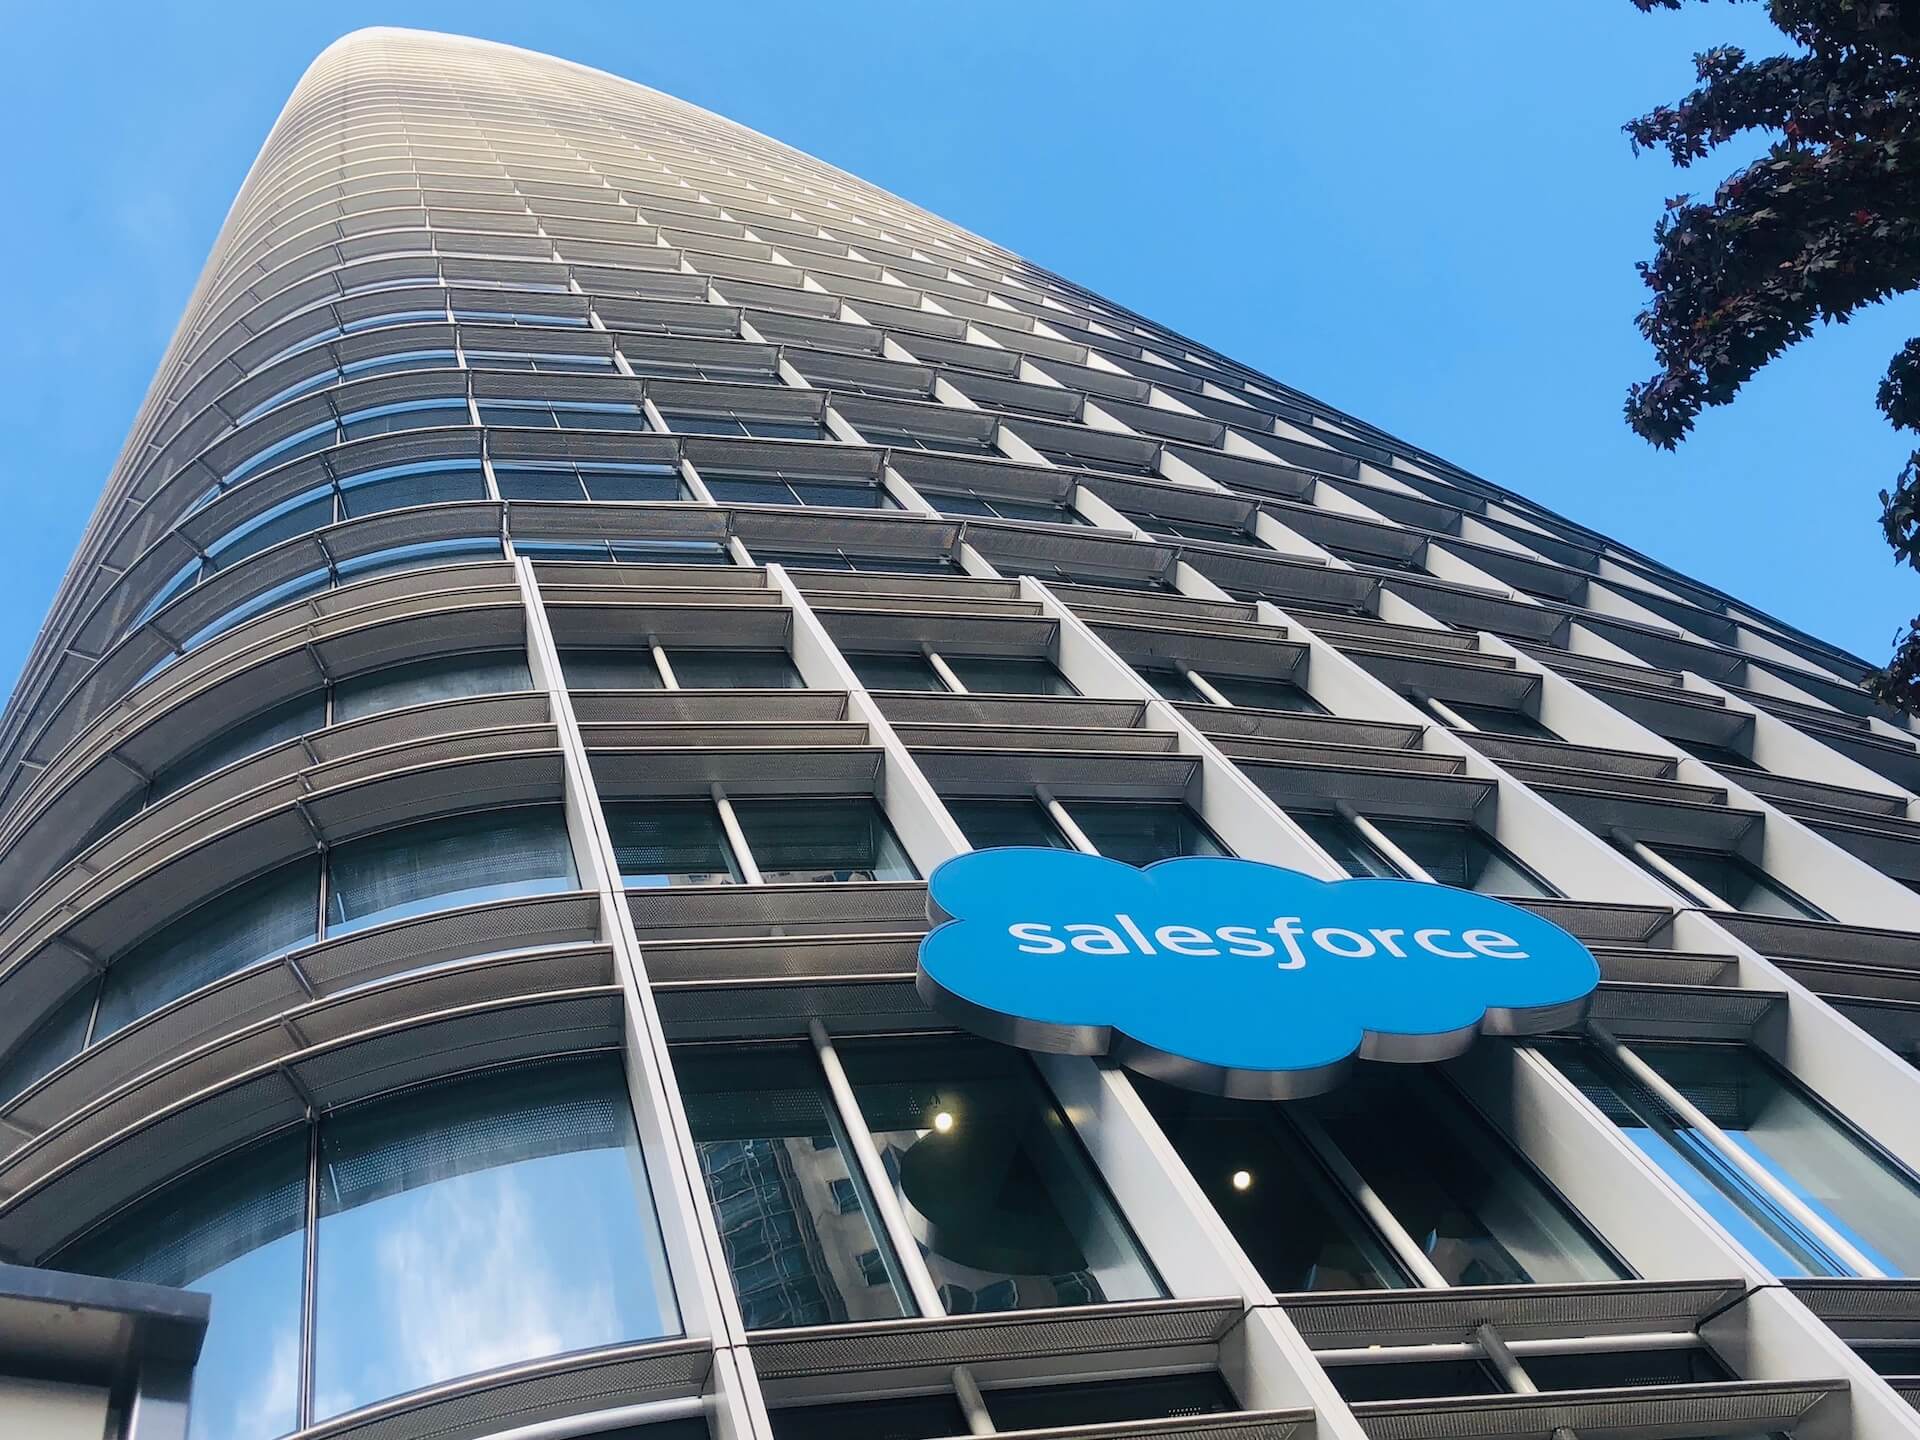 Performance degradation affecting Salesforce clients